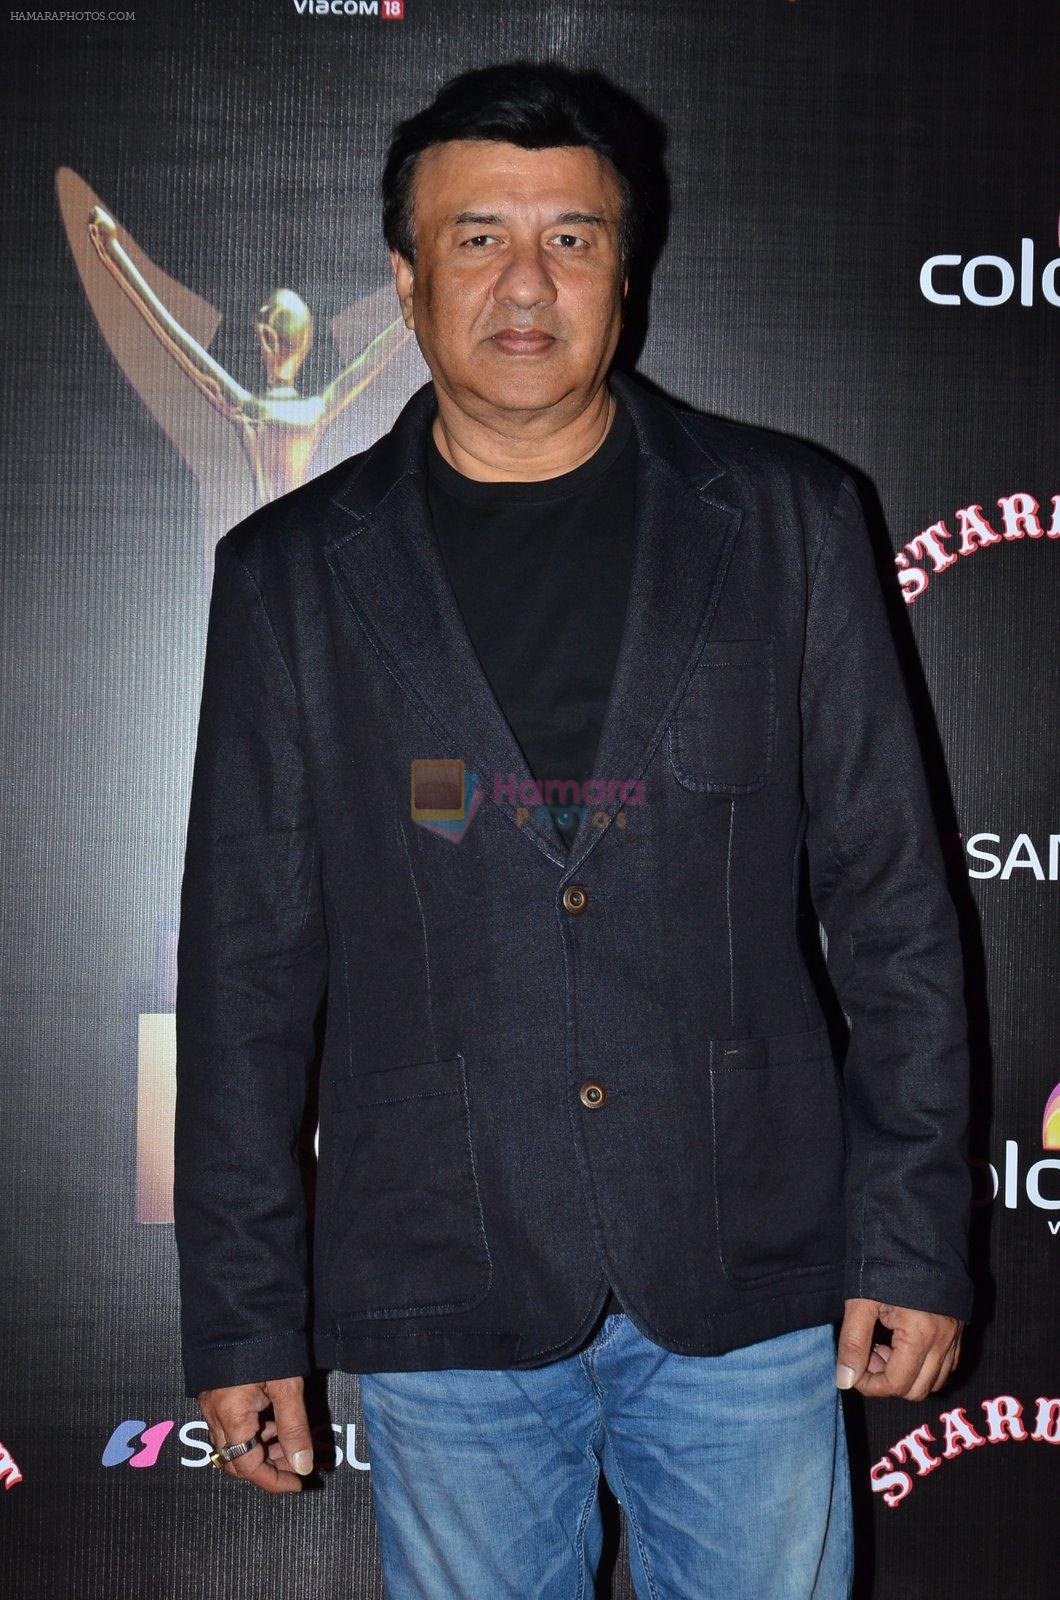 Anu Malik at Sansui Stardust Awards red carpet in Mumbai on 14th Dec 2014